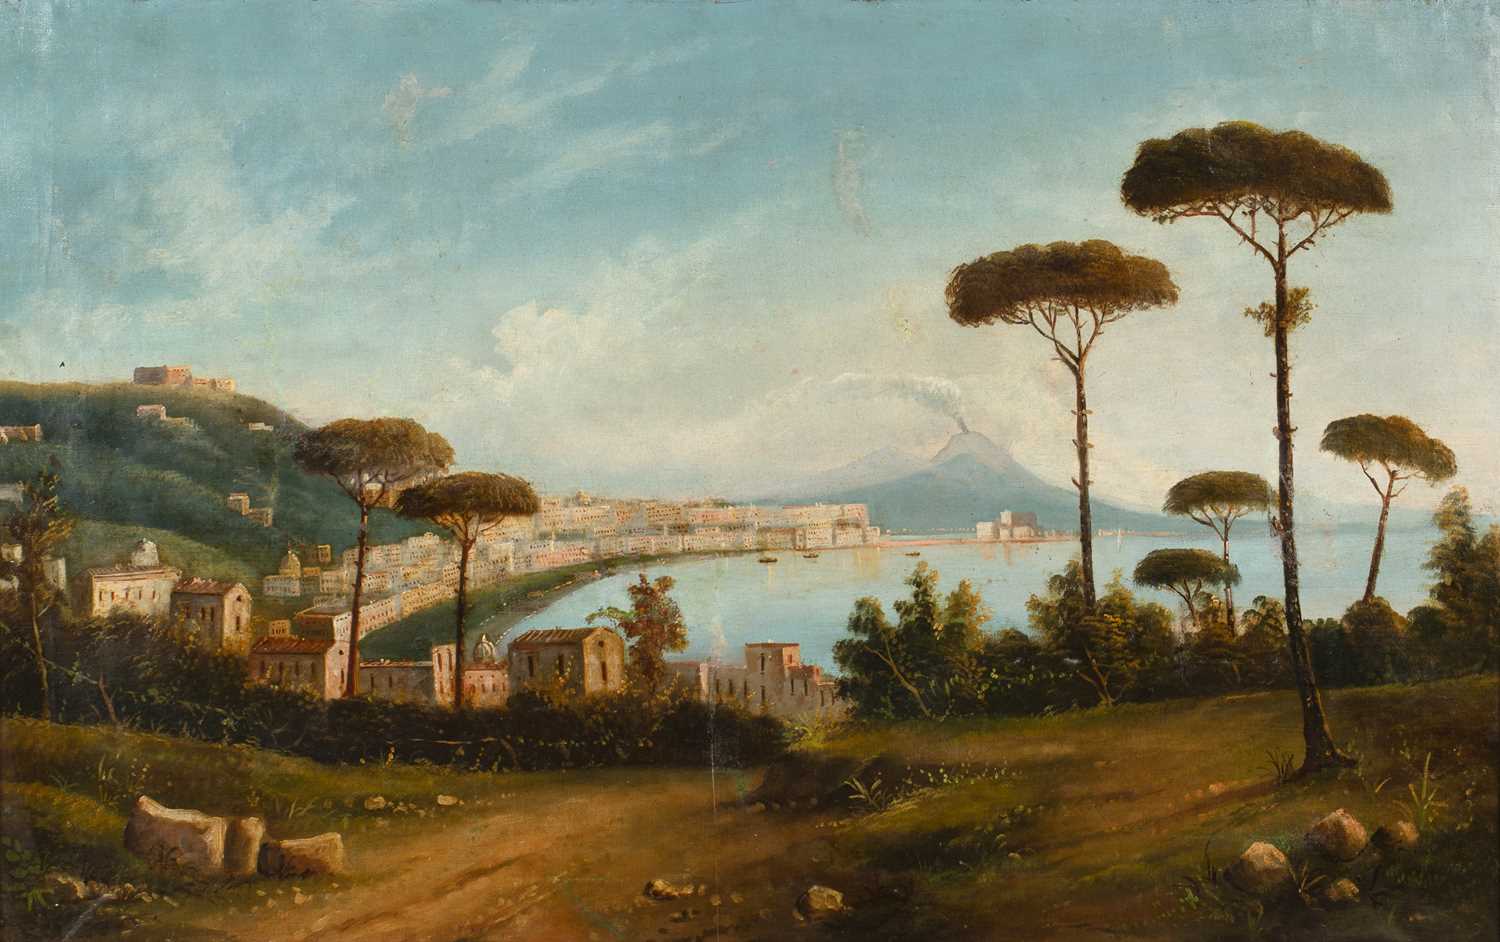 19th century Neapolitan school The Bay of Naples with Vesuvius erupting, oil on canvas, 65 x 104cm